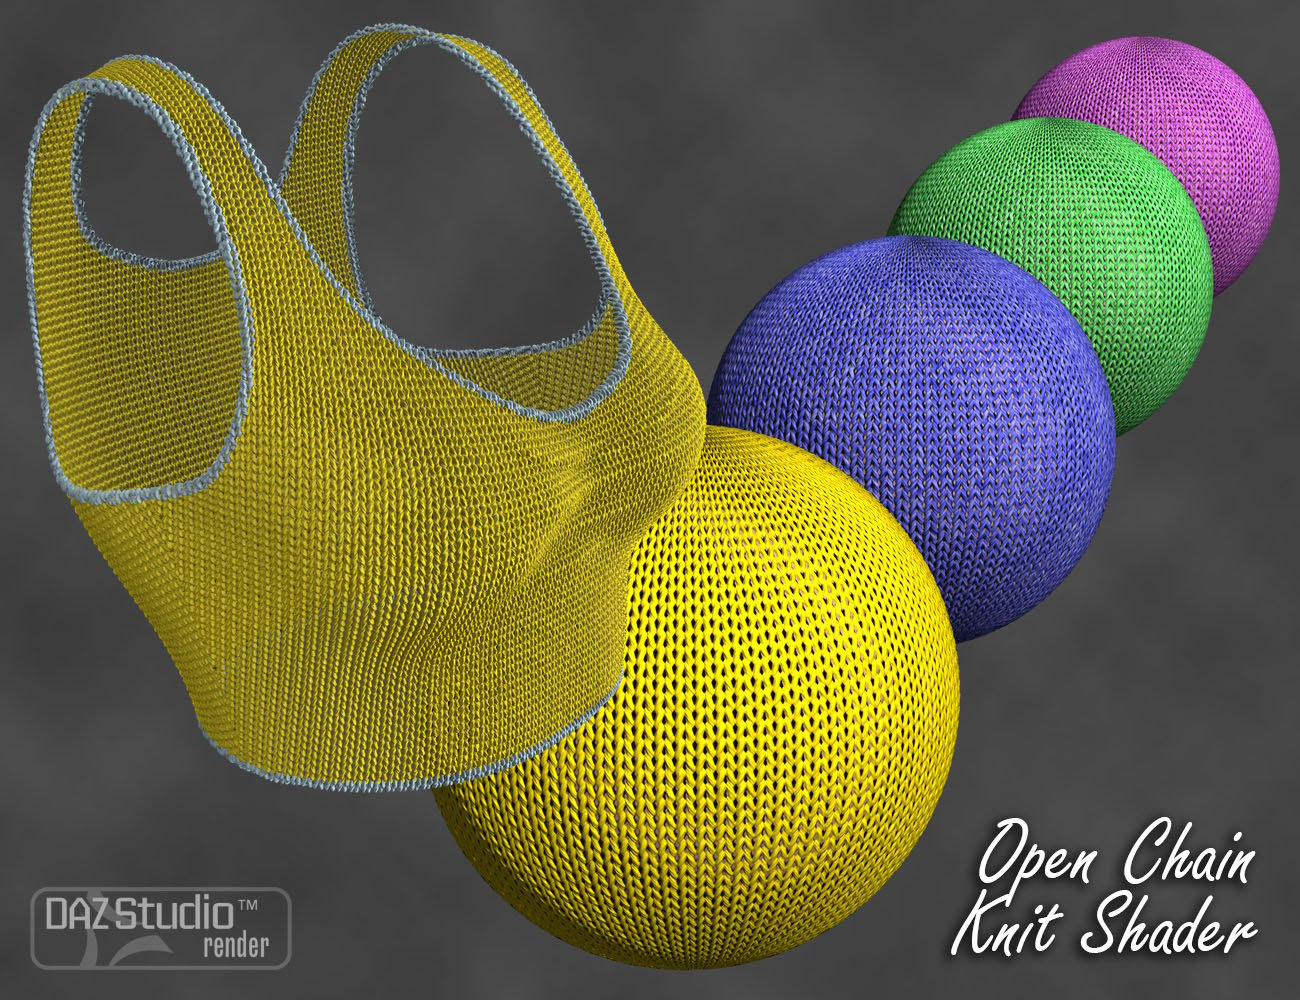 Fun With Yarn - Nifty Knitting Shaders by: Denki Gaka, 3D Models by Daz 3D